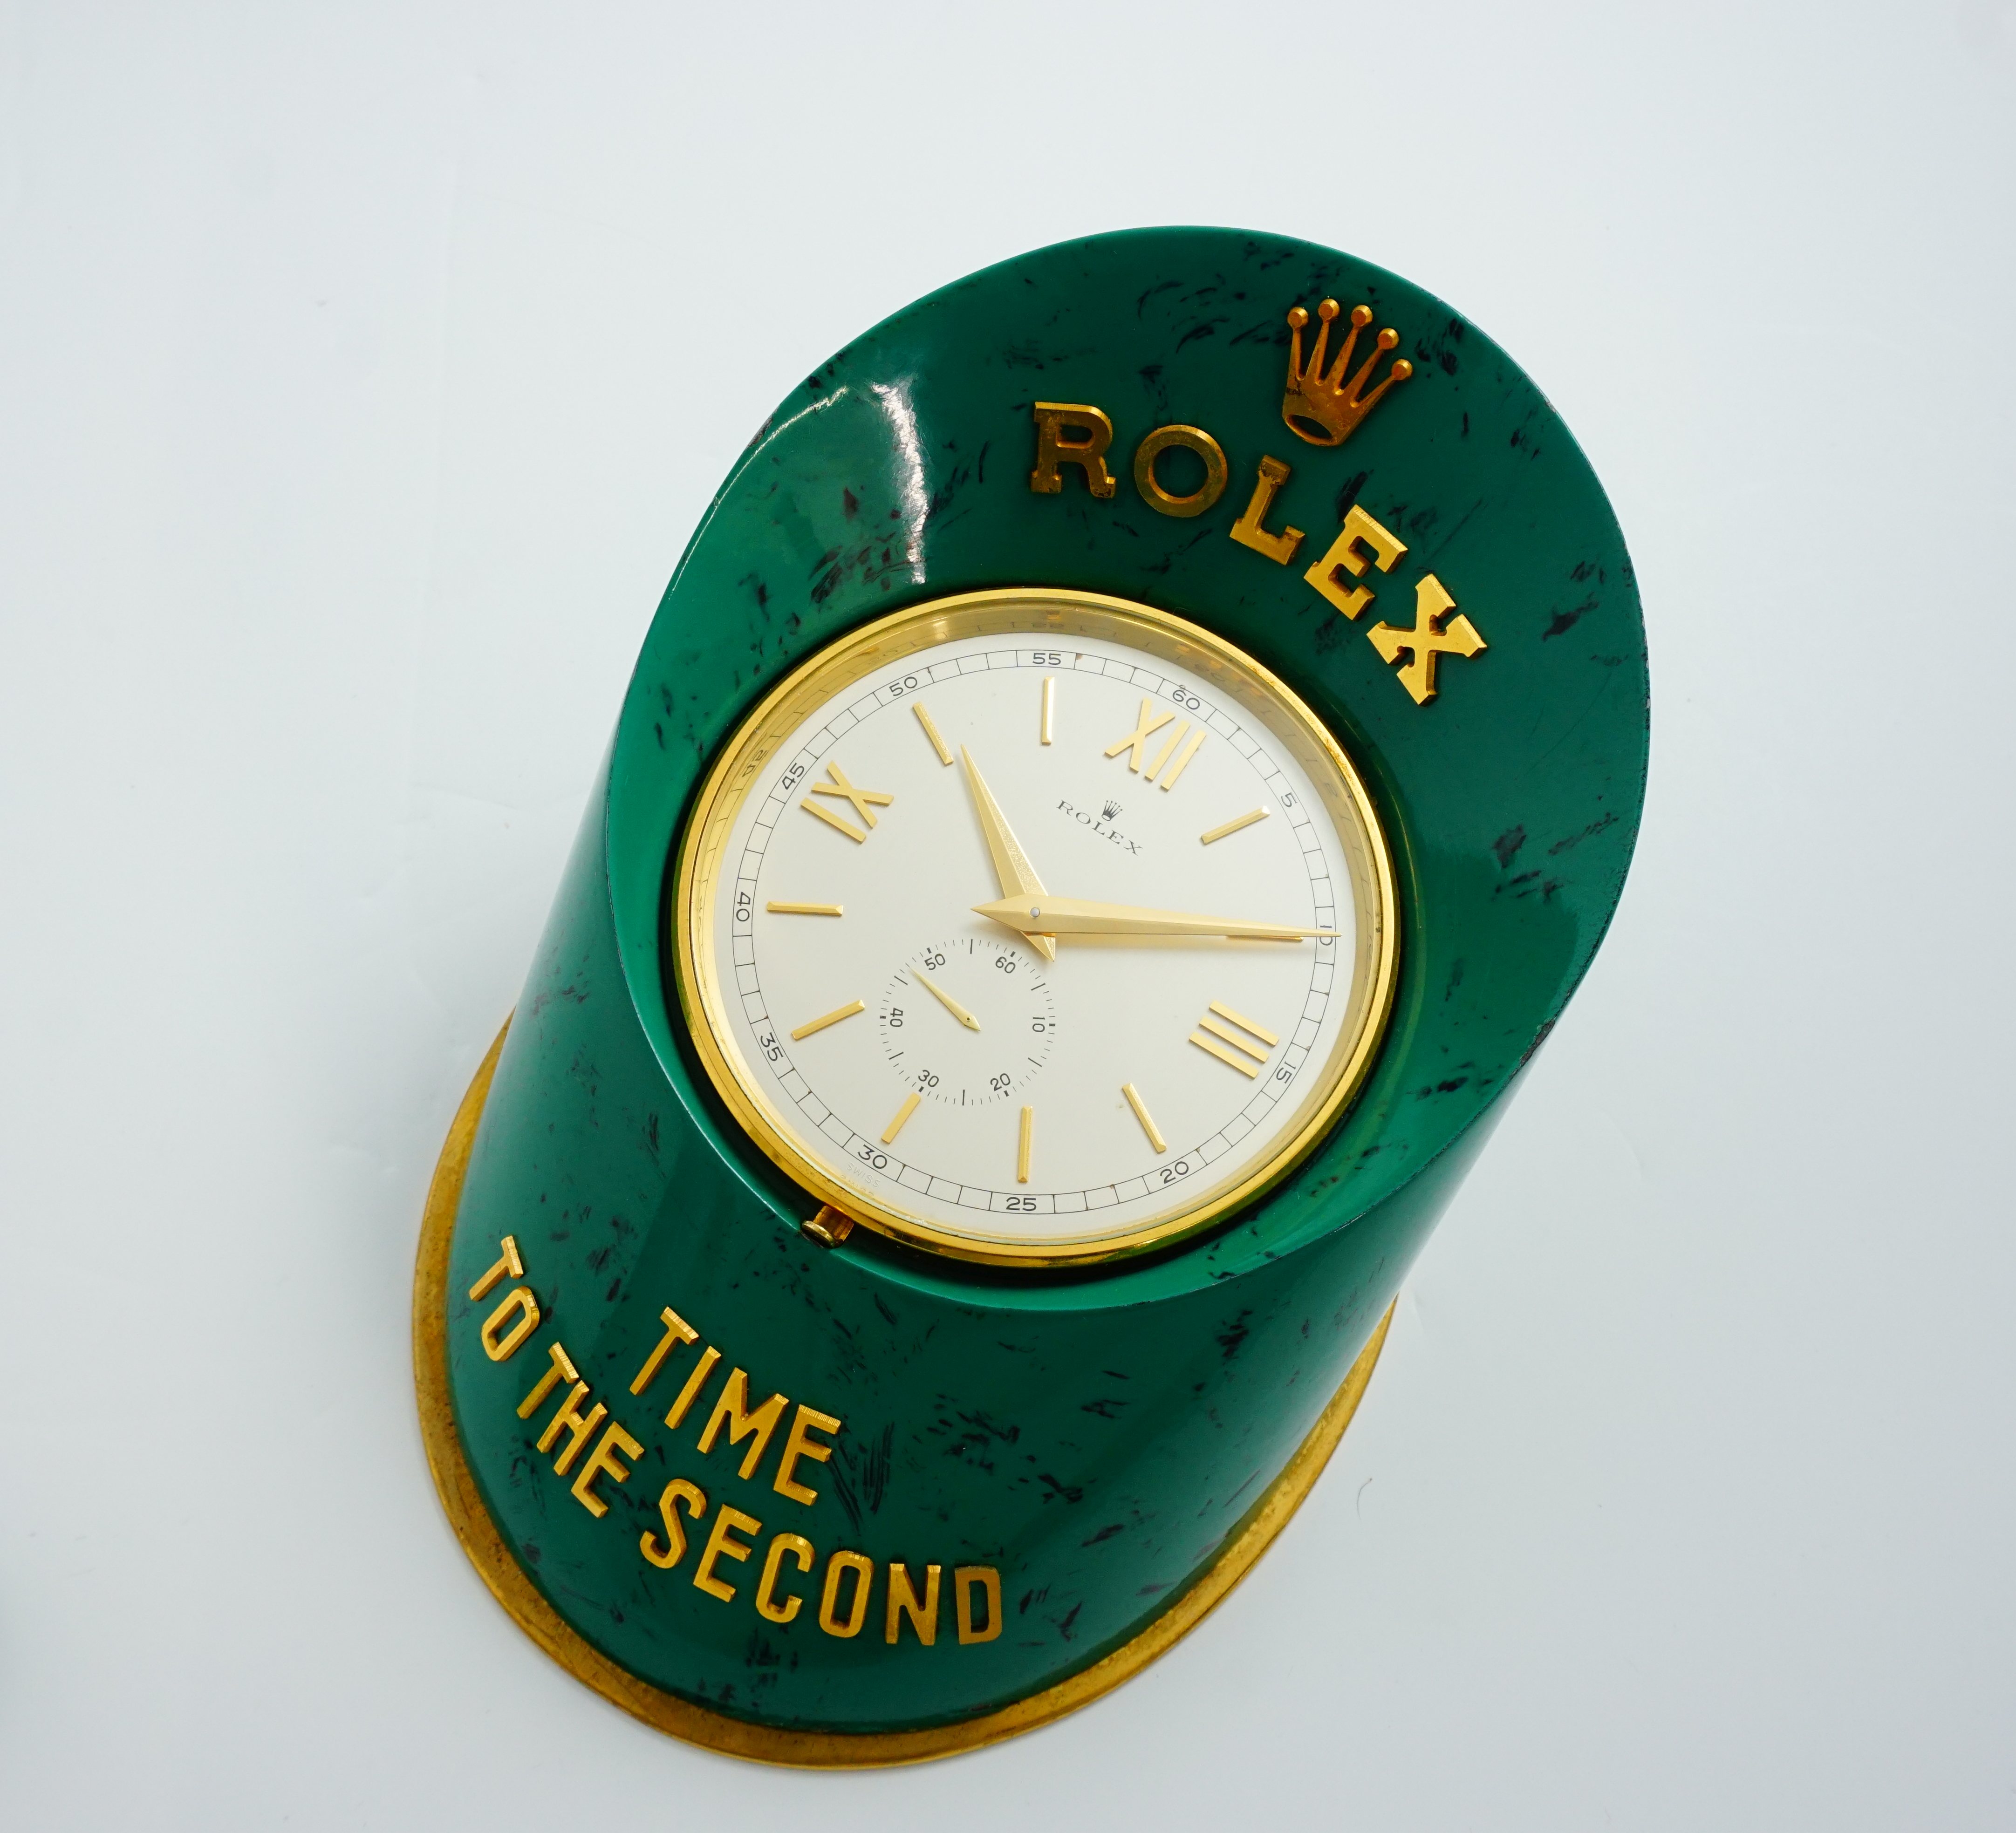 Countdonw clock